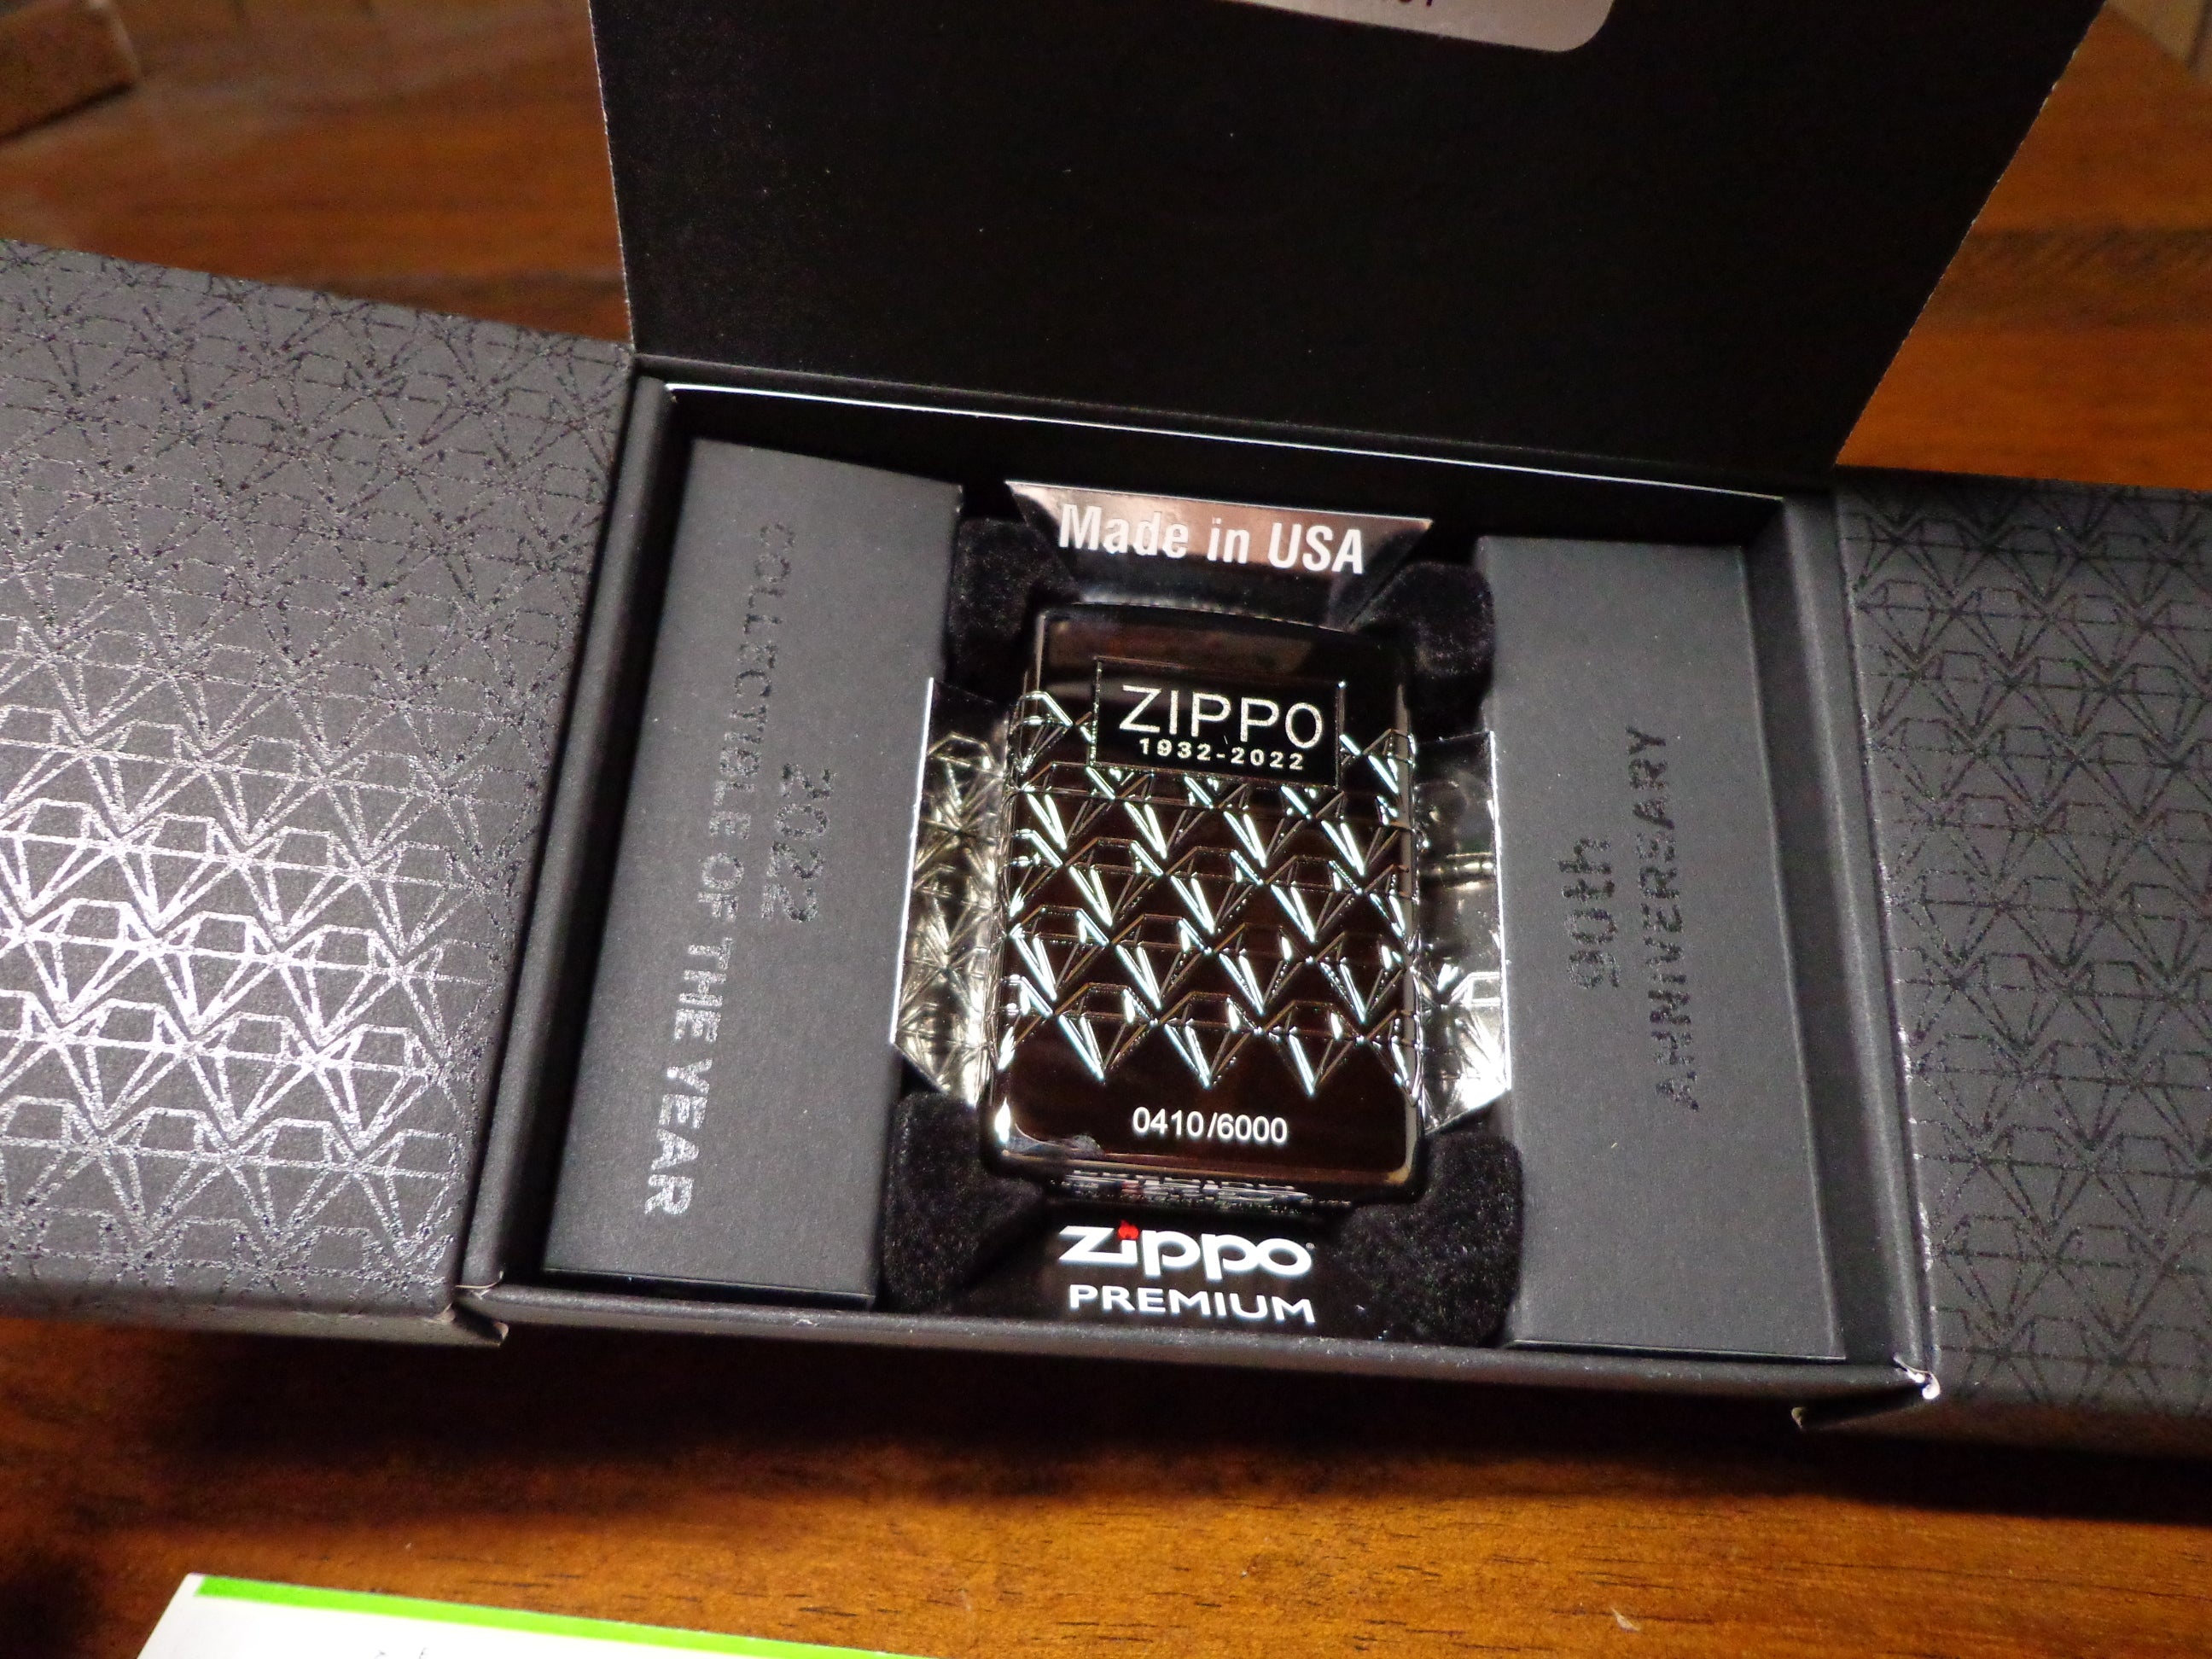 Buy ZIPPO Petrol Lighter, Collectible Zippo Lighter, Made in USA